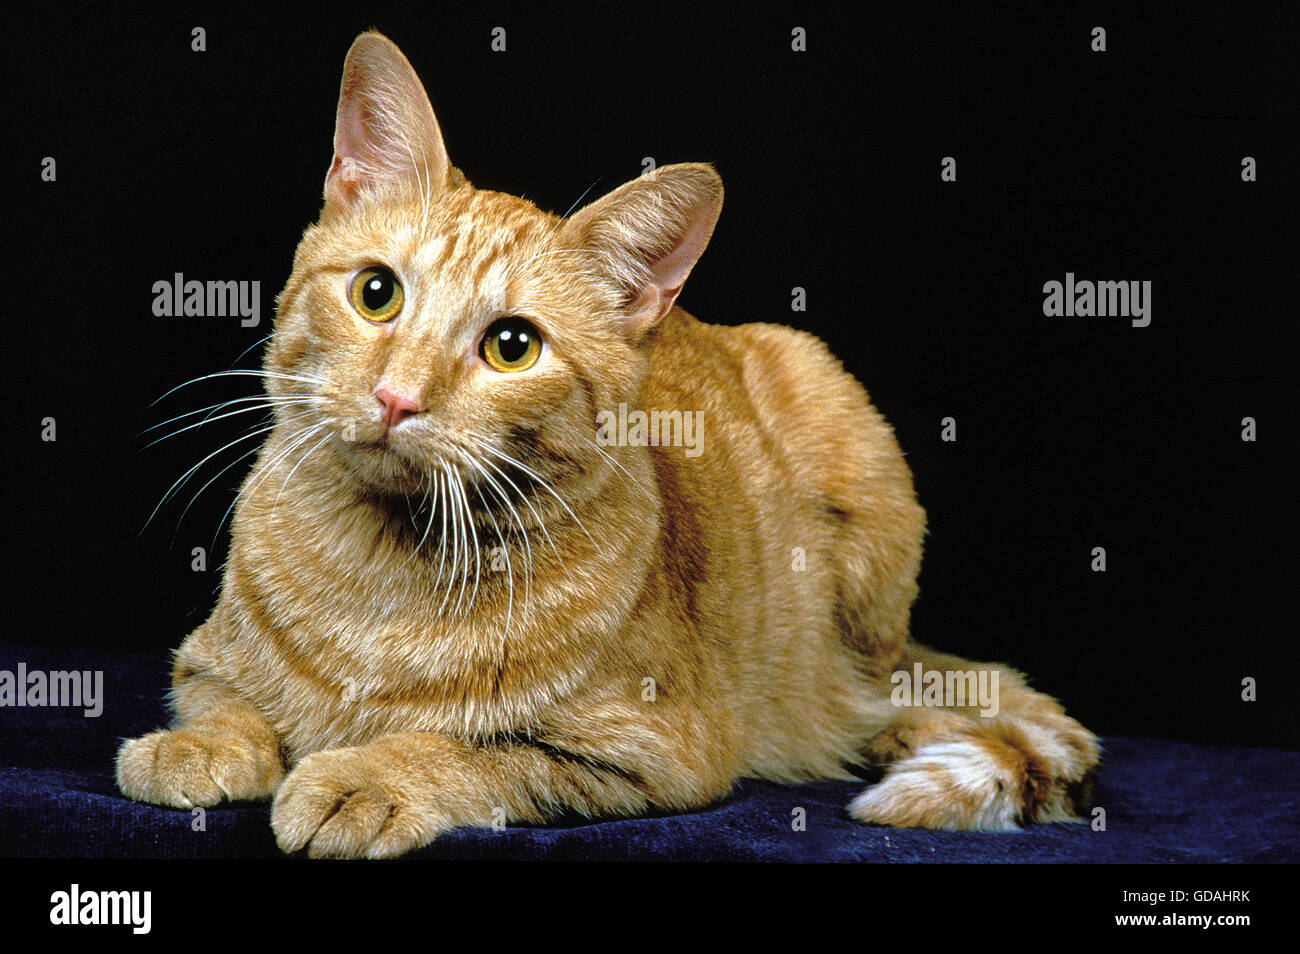 AMERICAN SHORTHAIR gato doméstico, adulto se fijan contra fondo negro Foto de stock